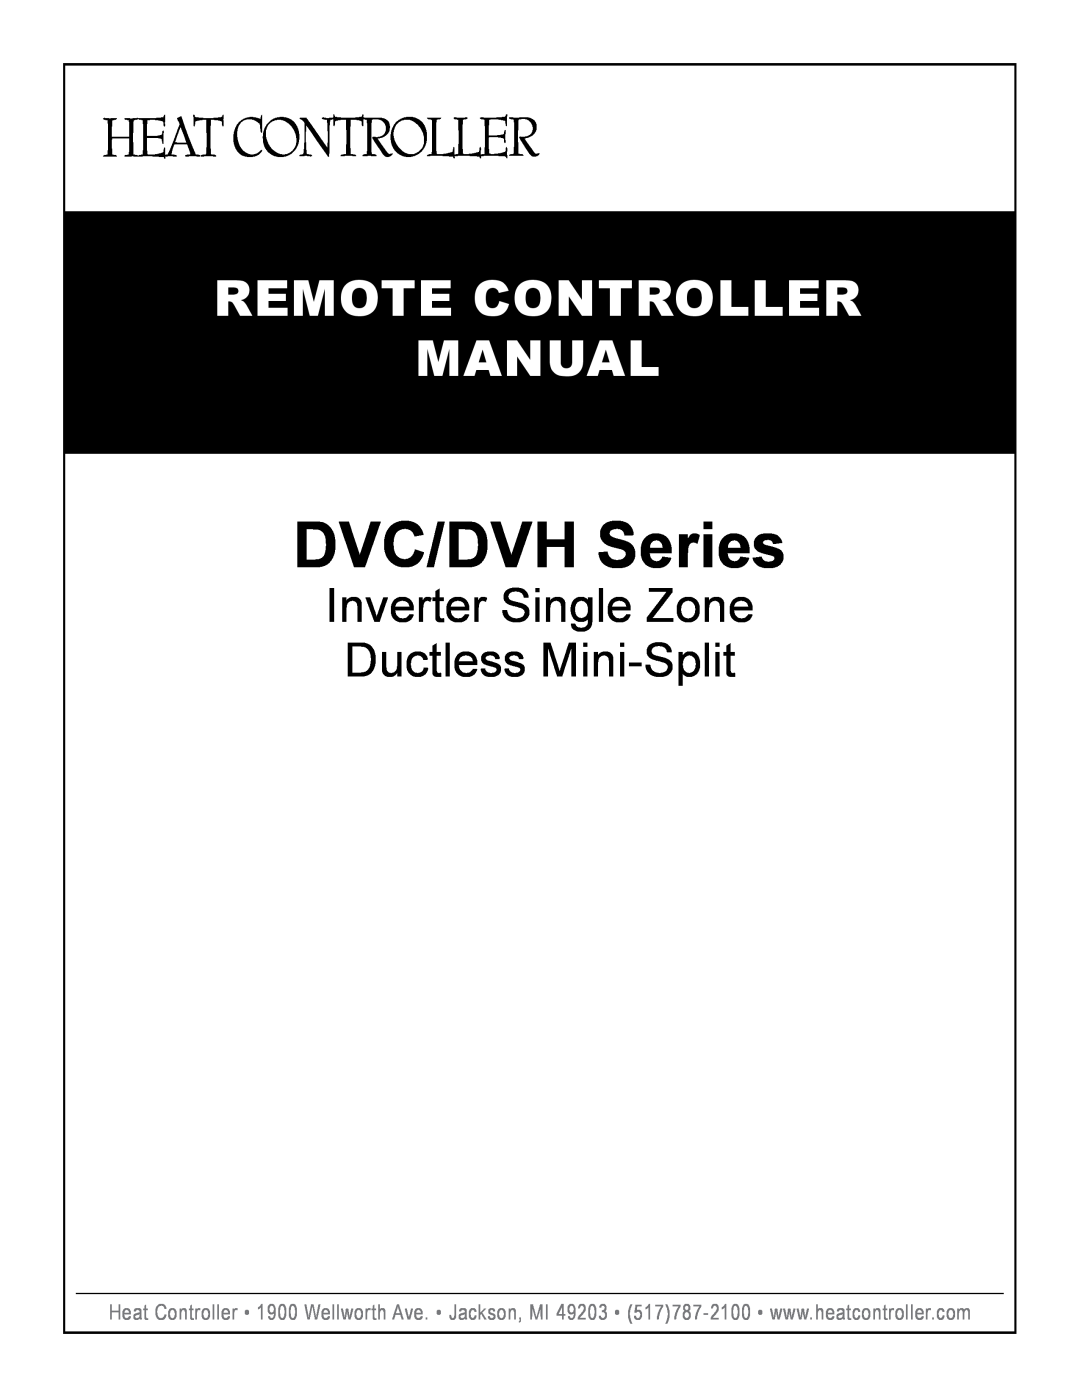 Heat Controller DVC/DVH SERIES manual DVC/DVH Series, Remote Controller Manual, Inverter Single Zone Ductless Mini-Split 